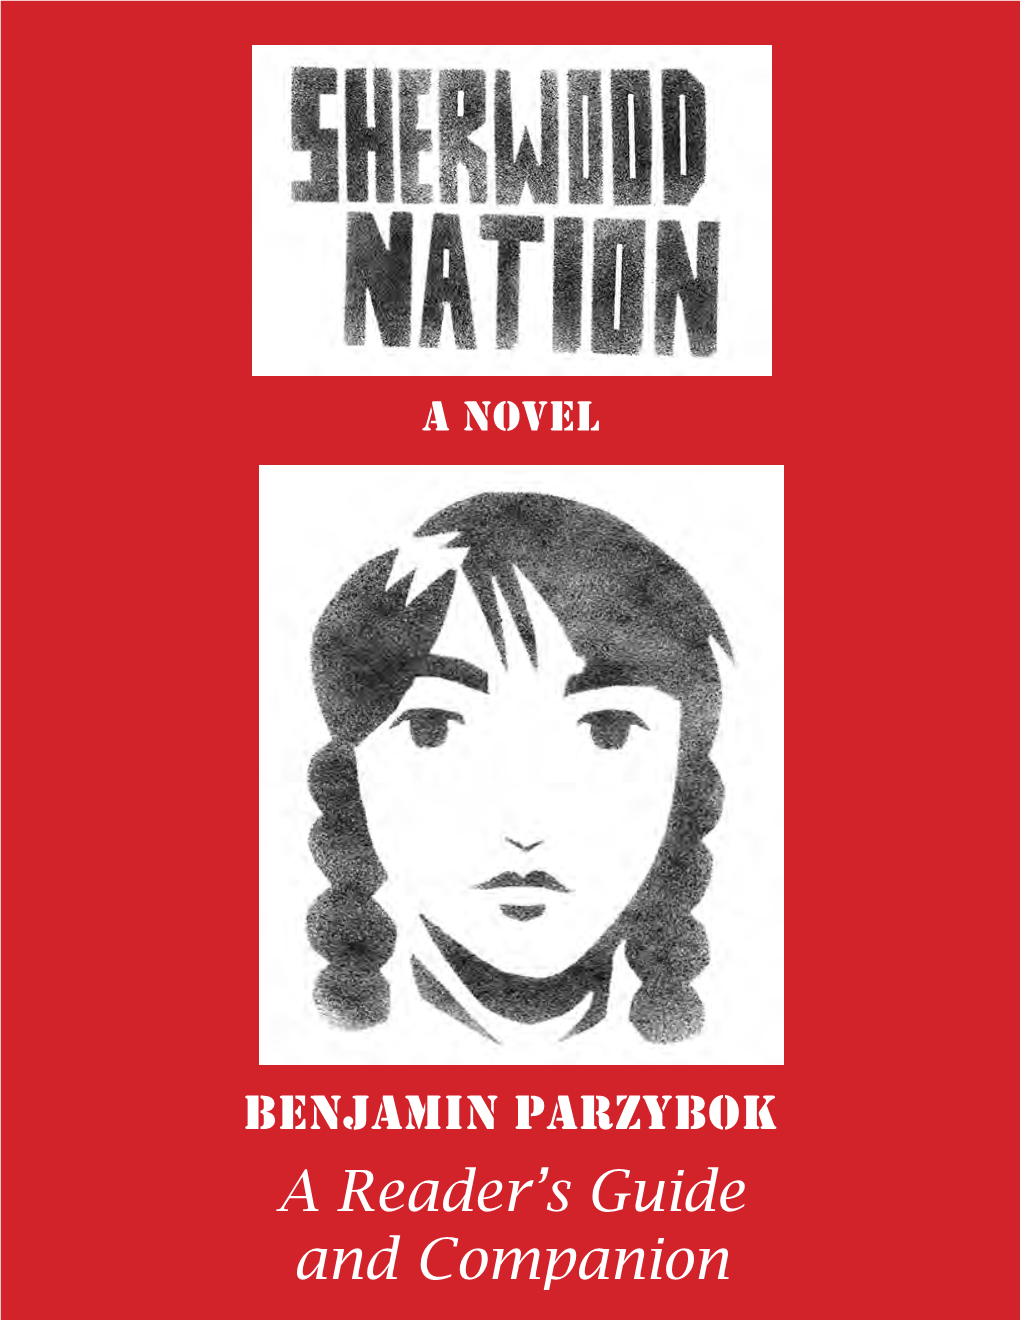 Sherwood Nation a Novel by Credits Benjamin Parzybok Author Photo: Jodi Darby (Jodidarby.Com)